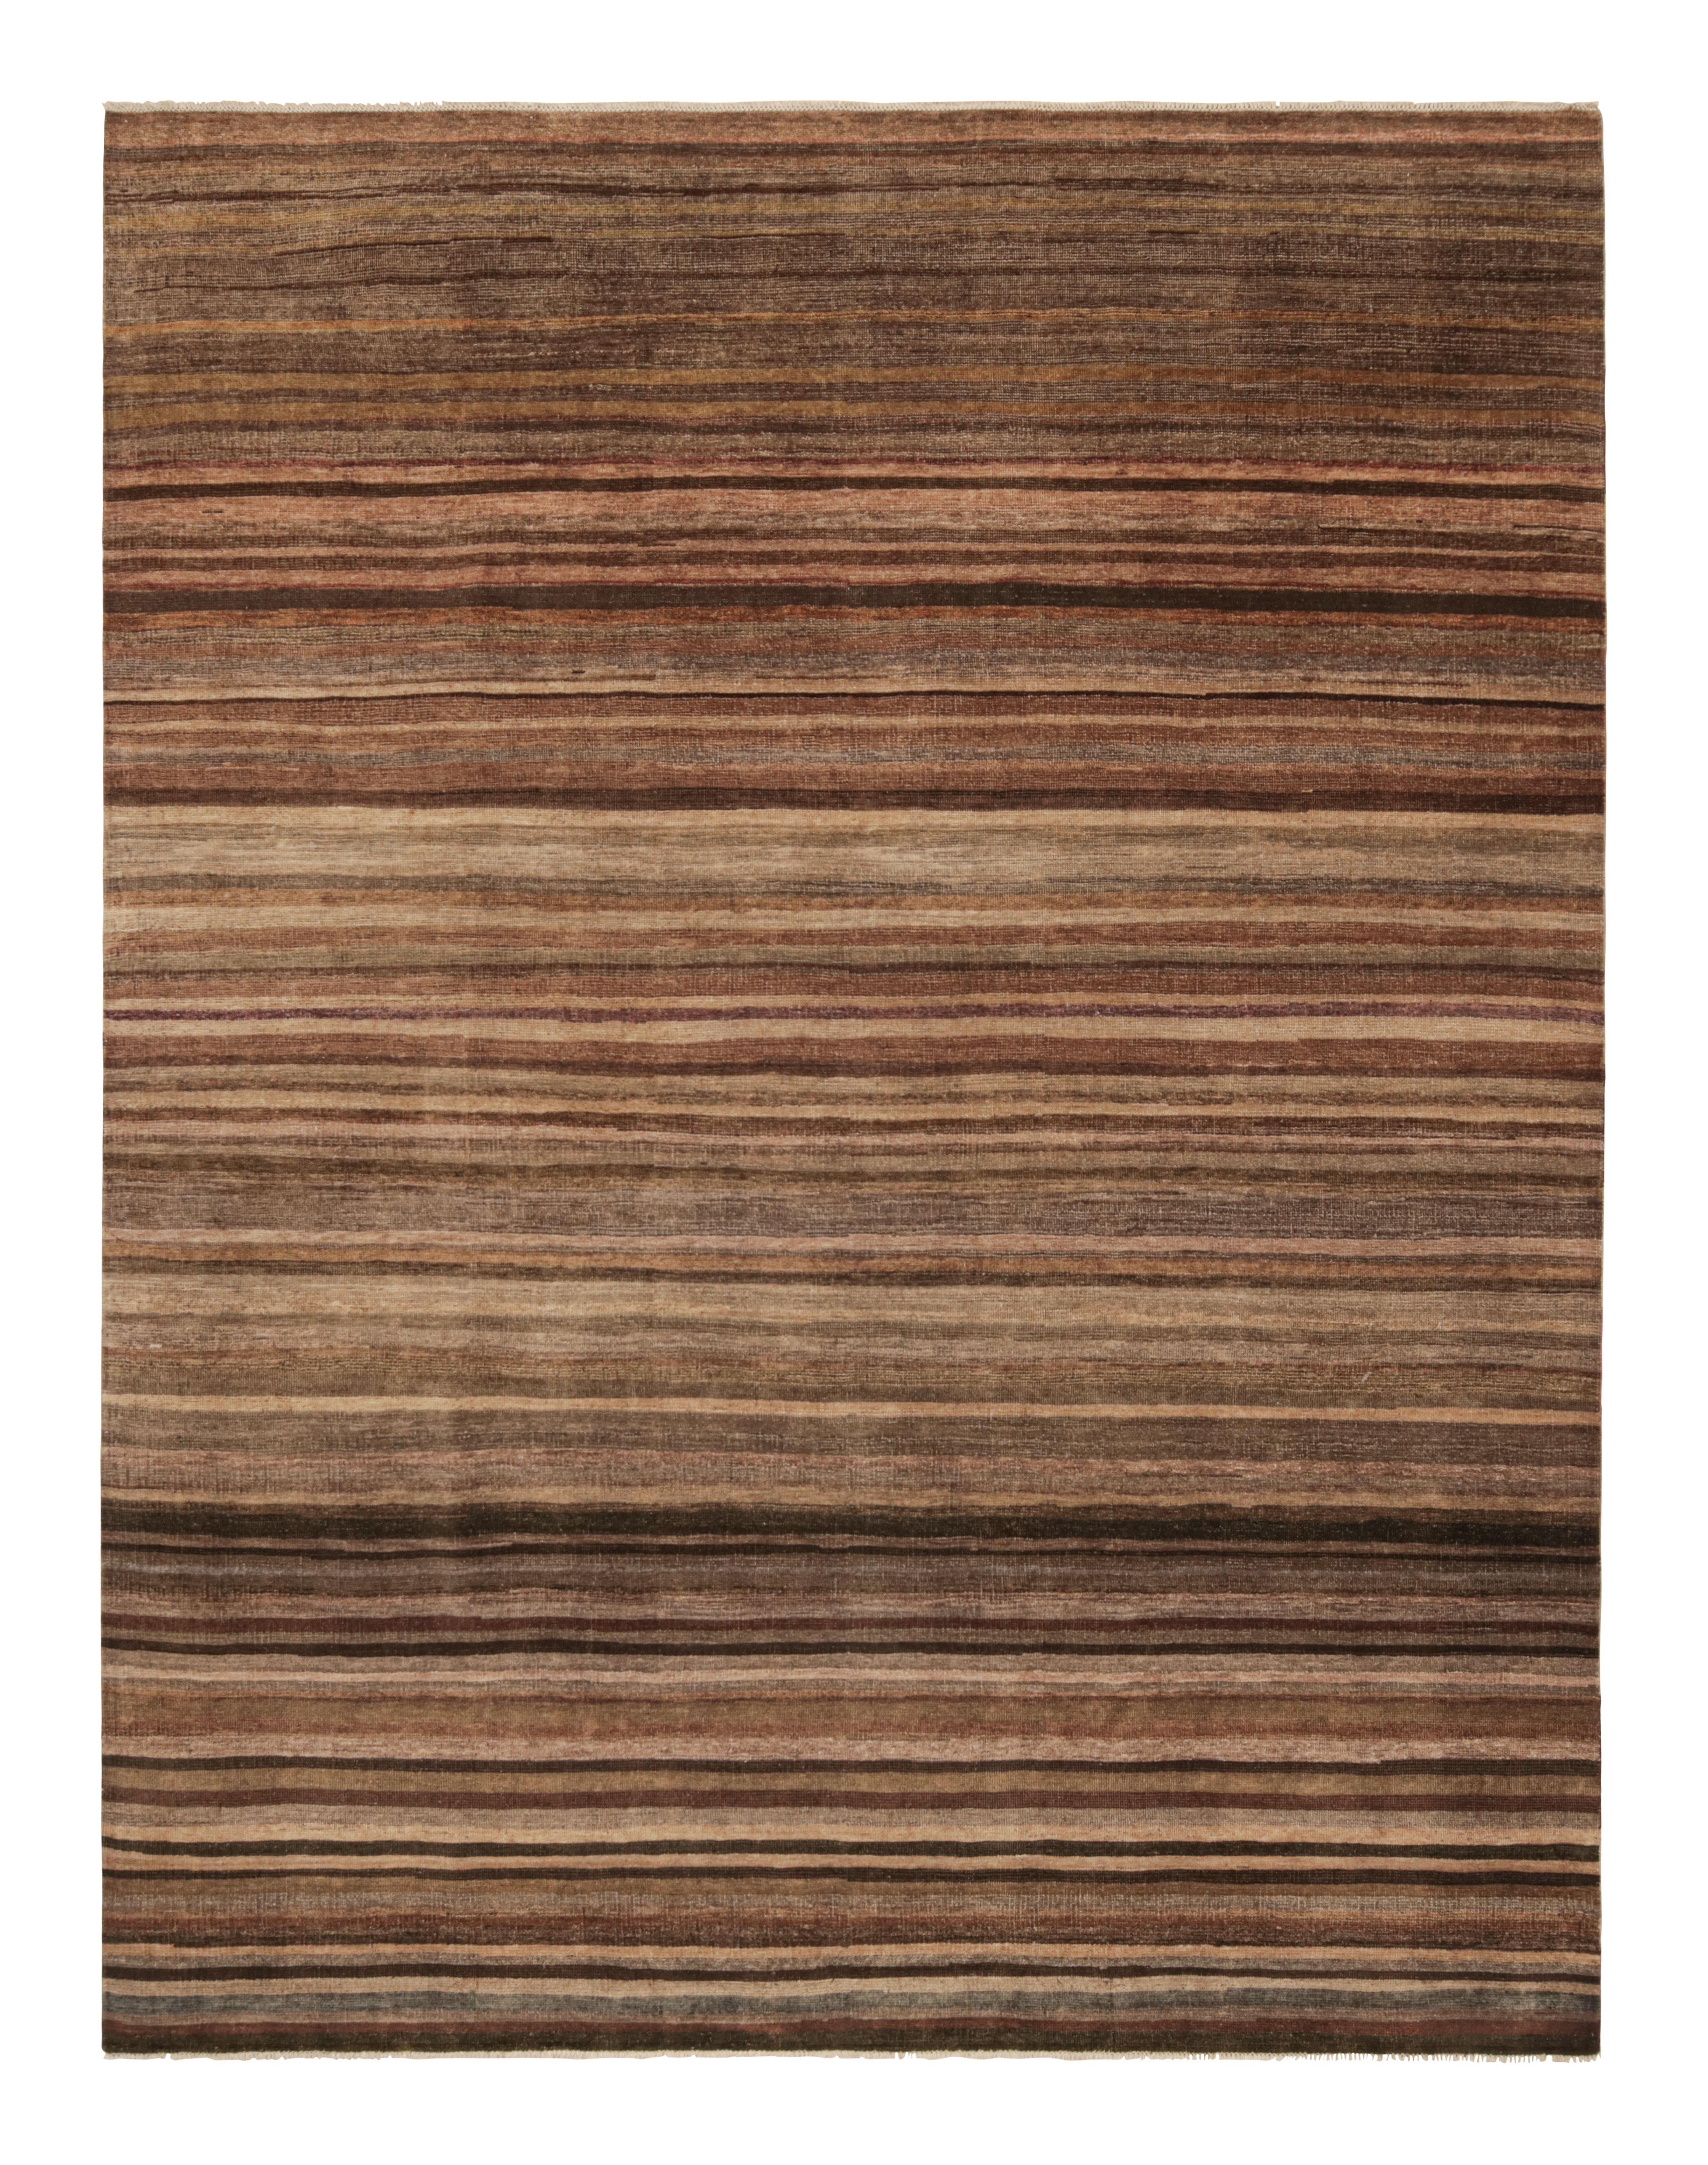 Moderne Rug & Kilim's Modern Textural Rug in Beige-Brown and Umber Stripes and Striae (Tapis à rayures beige, marron et orange) en vente